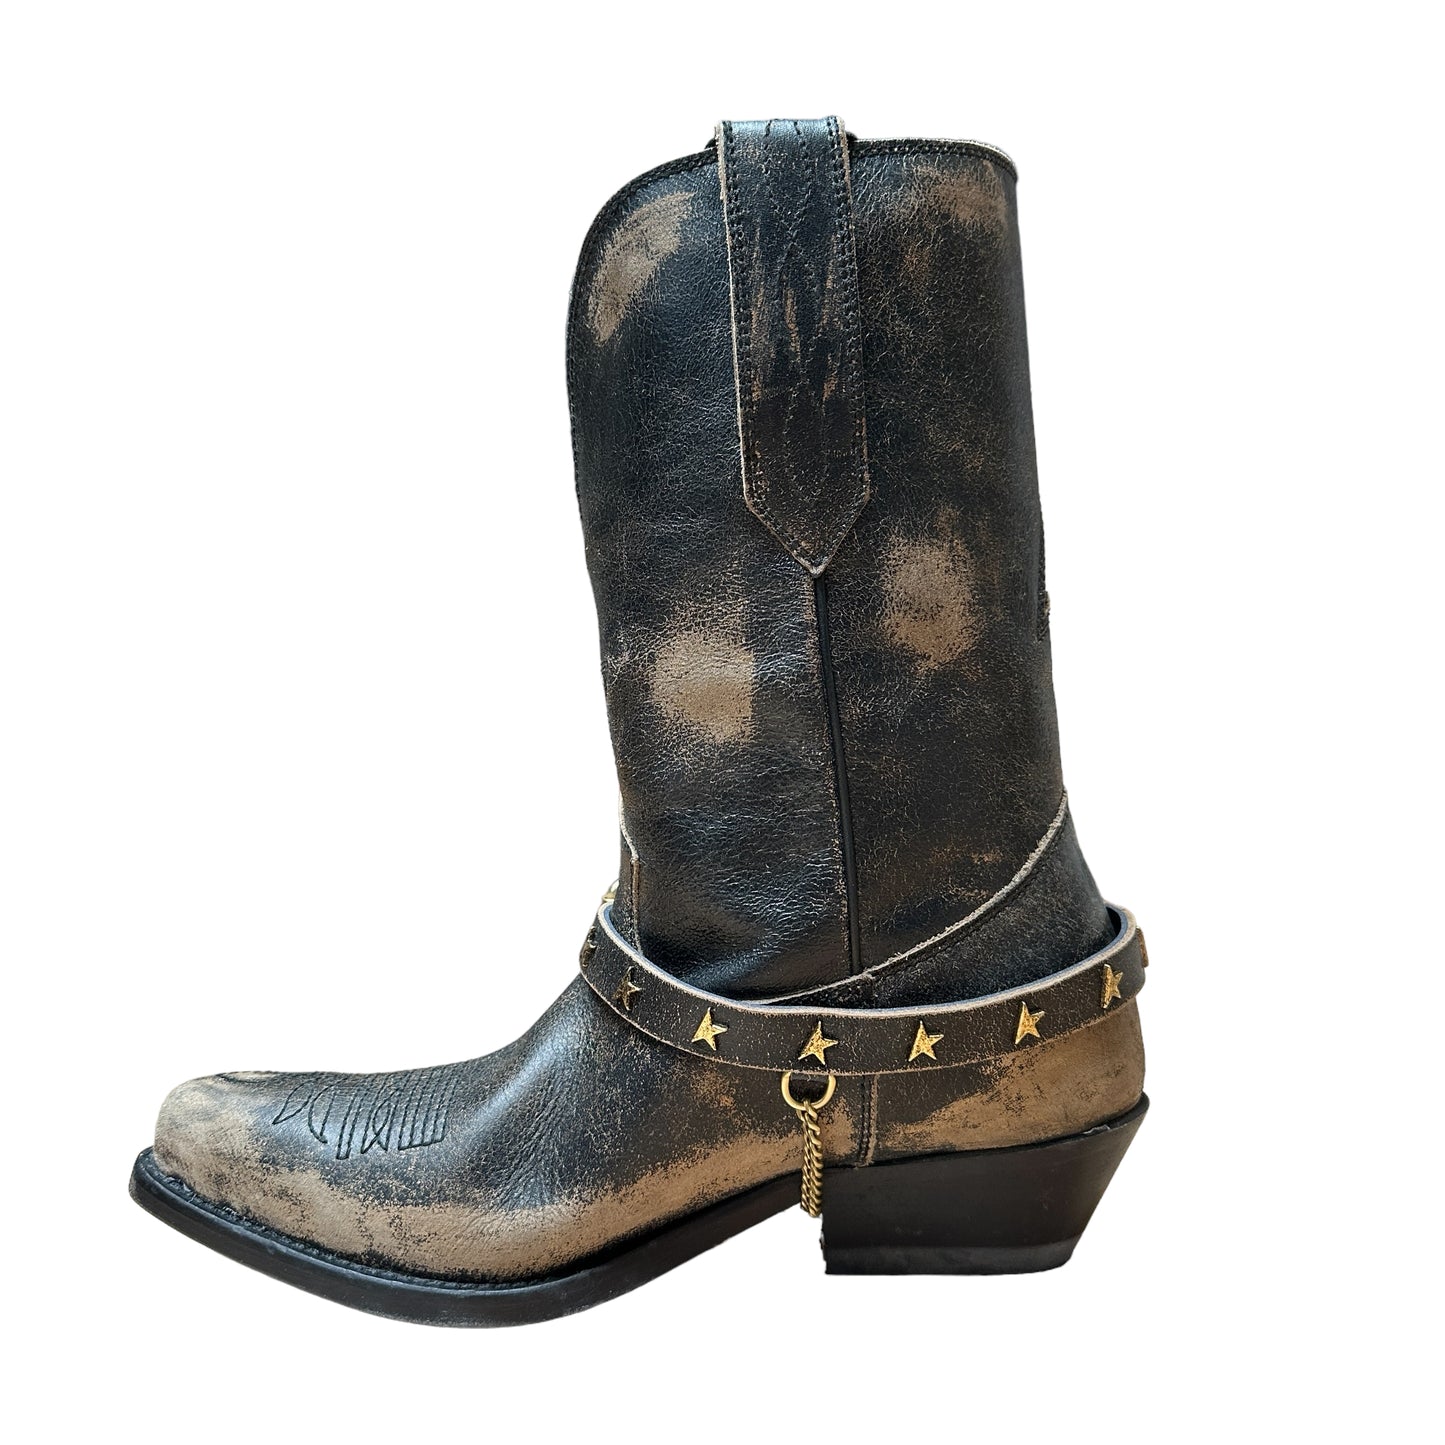 Cowboy Black and Tan Boots - 7